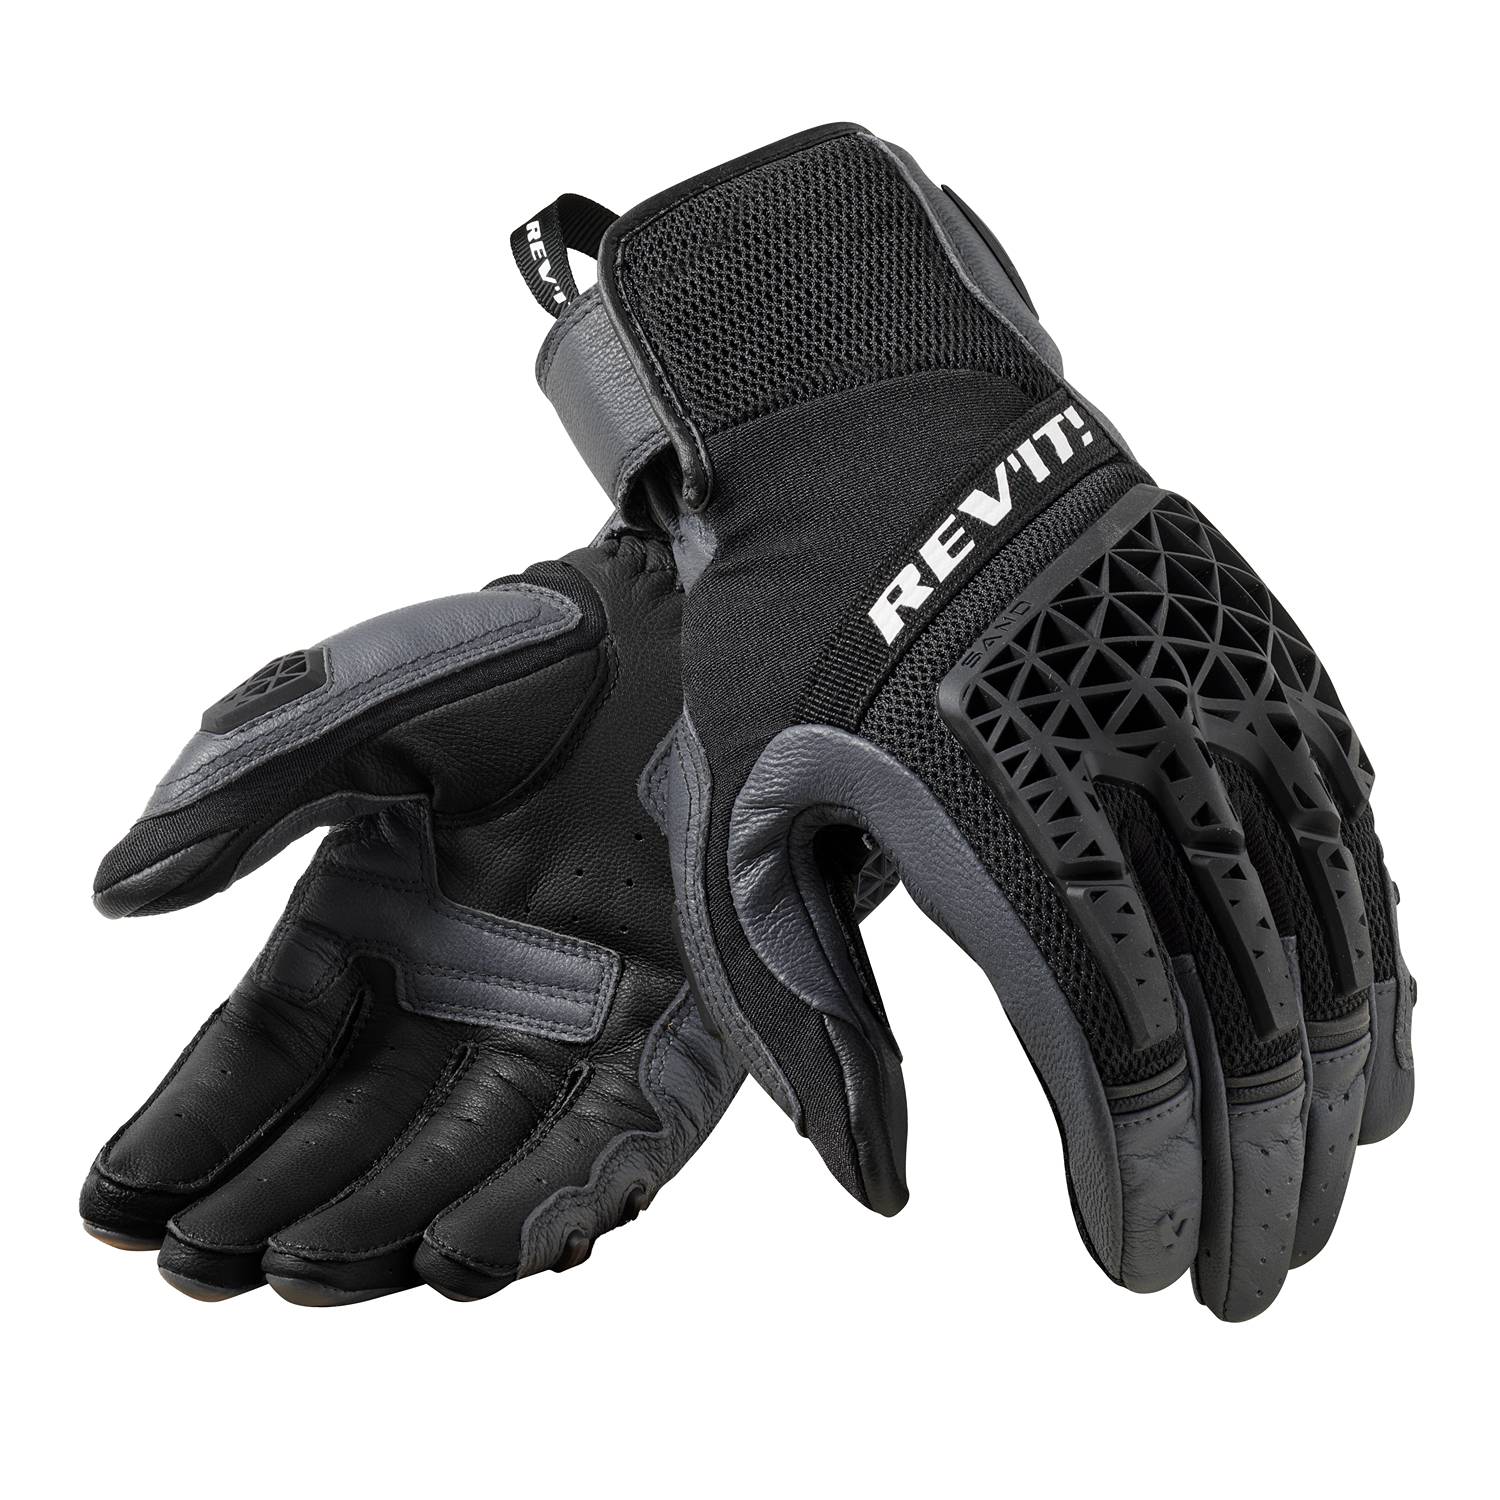 Image of REV'IT! Sand 4 Gloves Gray Black Size S EN